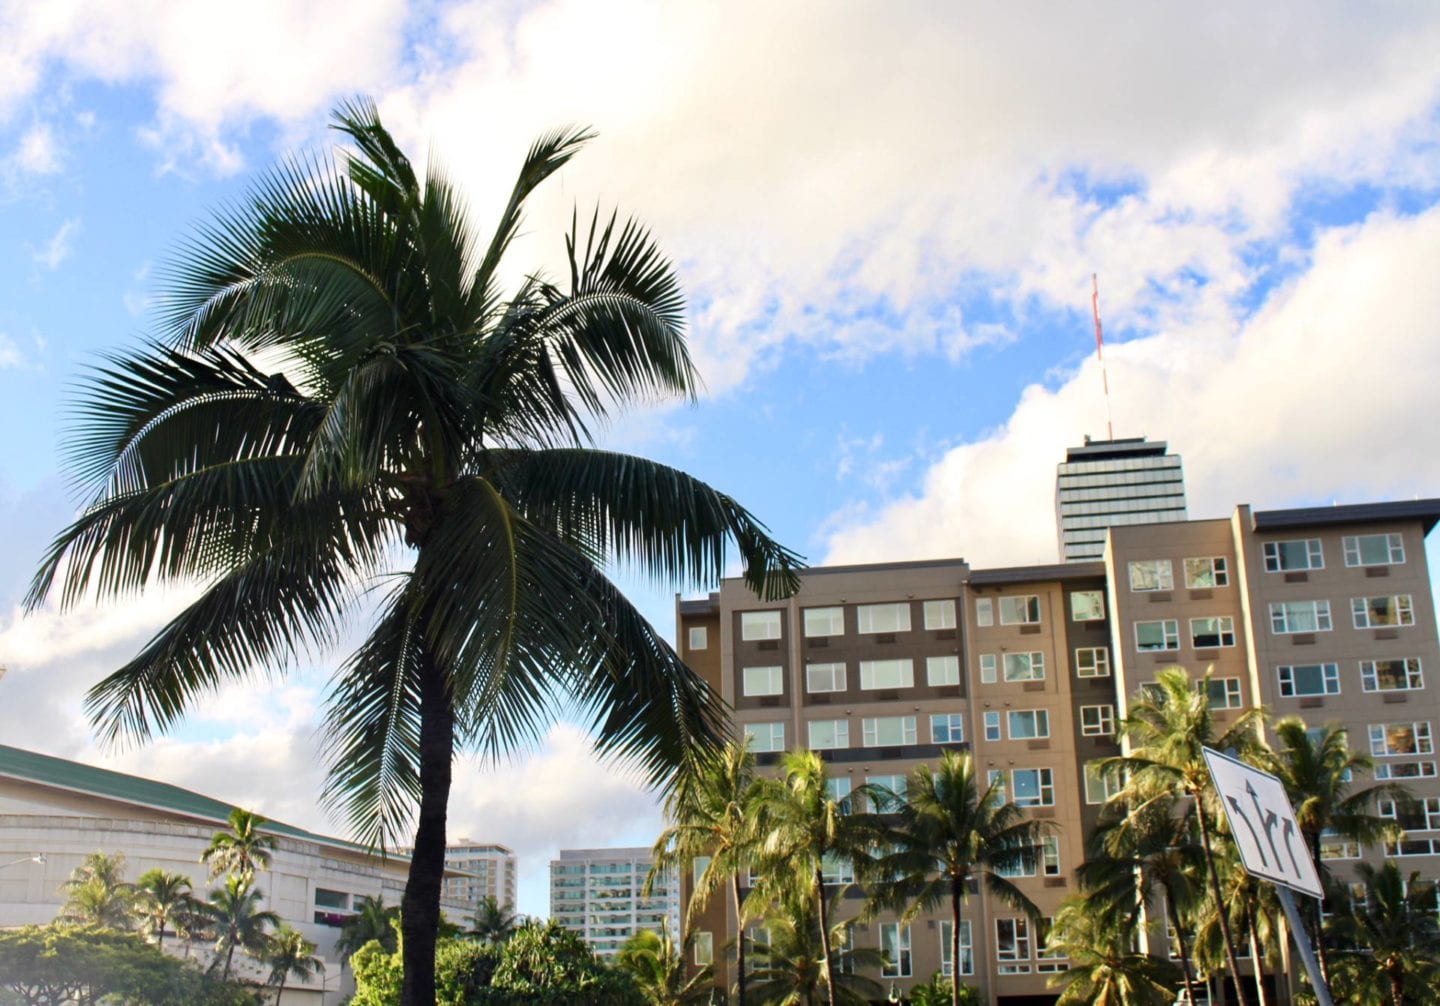 Oahu, Hawaii | Travel Guide